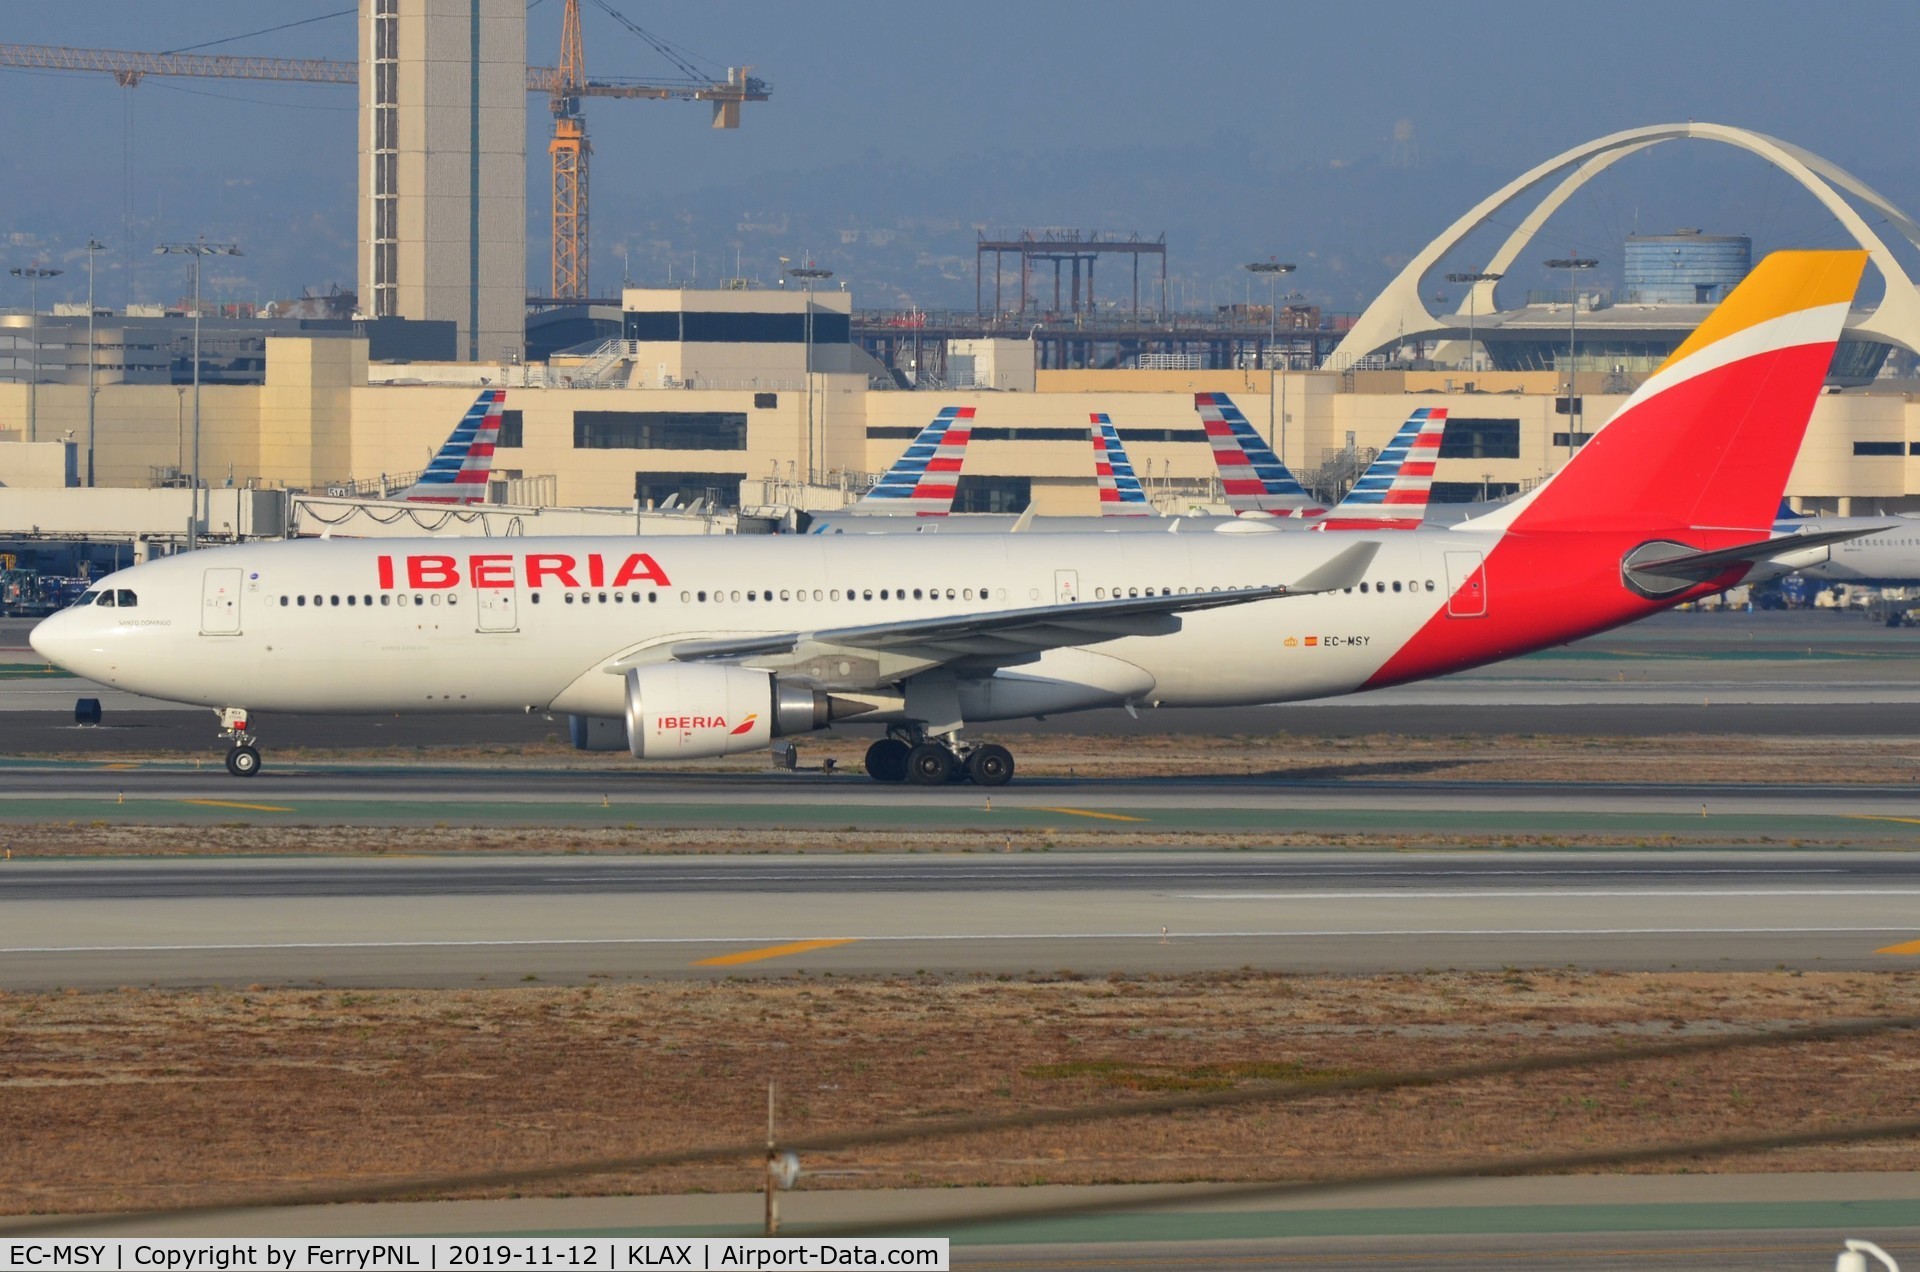 EC-MSY, 2017 Airbus A330-202 C/N 1835, Iberia A332 arrived in LAX